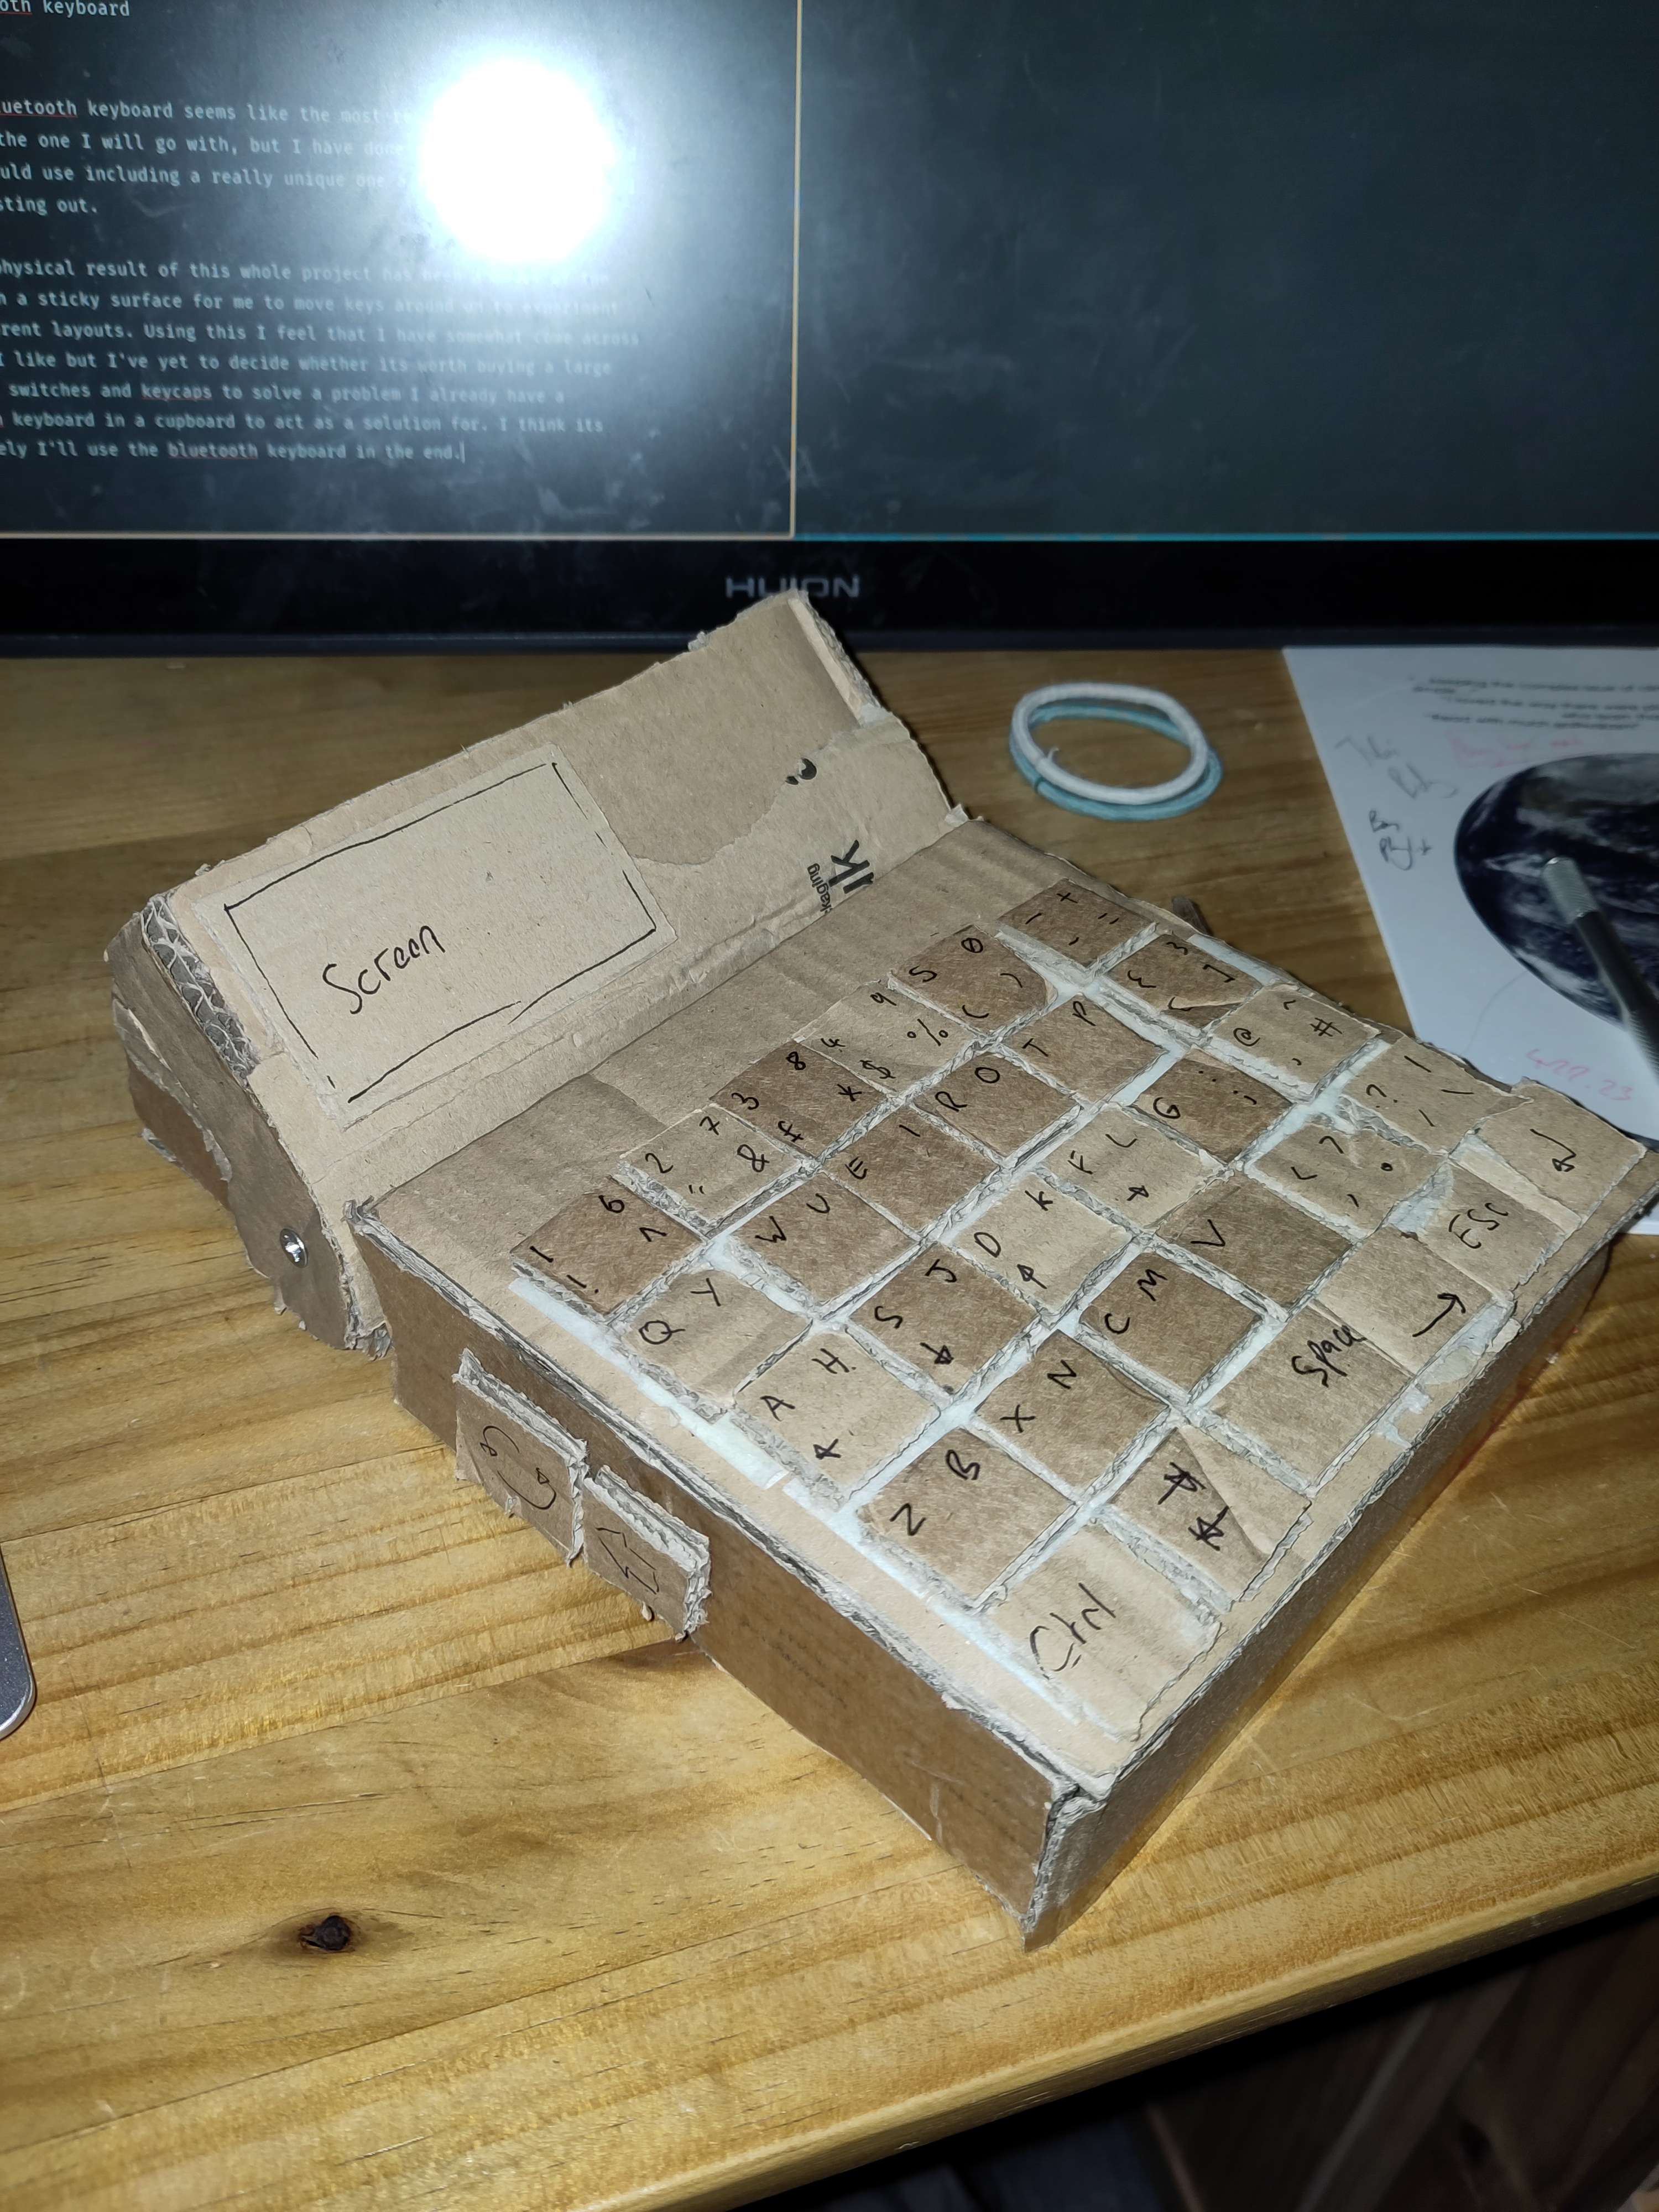 cardboard keyboard prototype